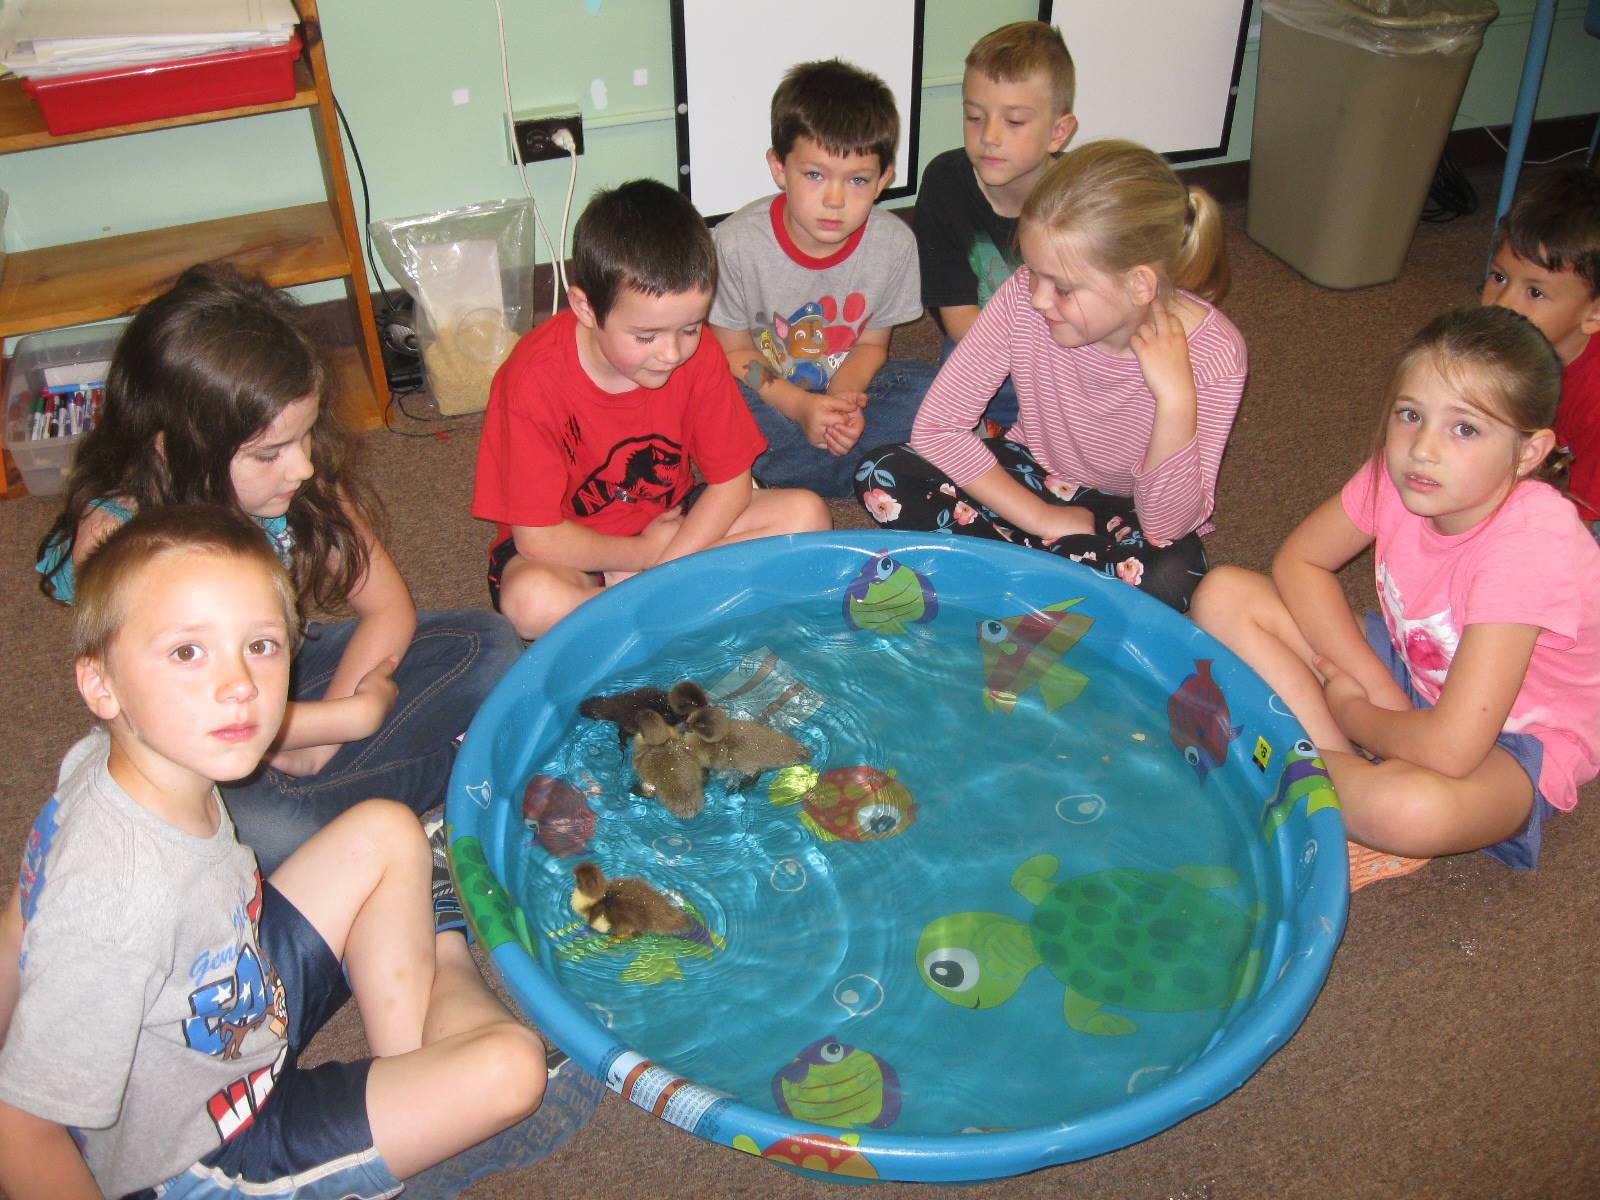 7 students  watch ducks swim in a pool.